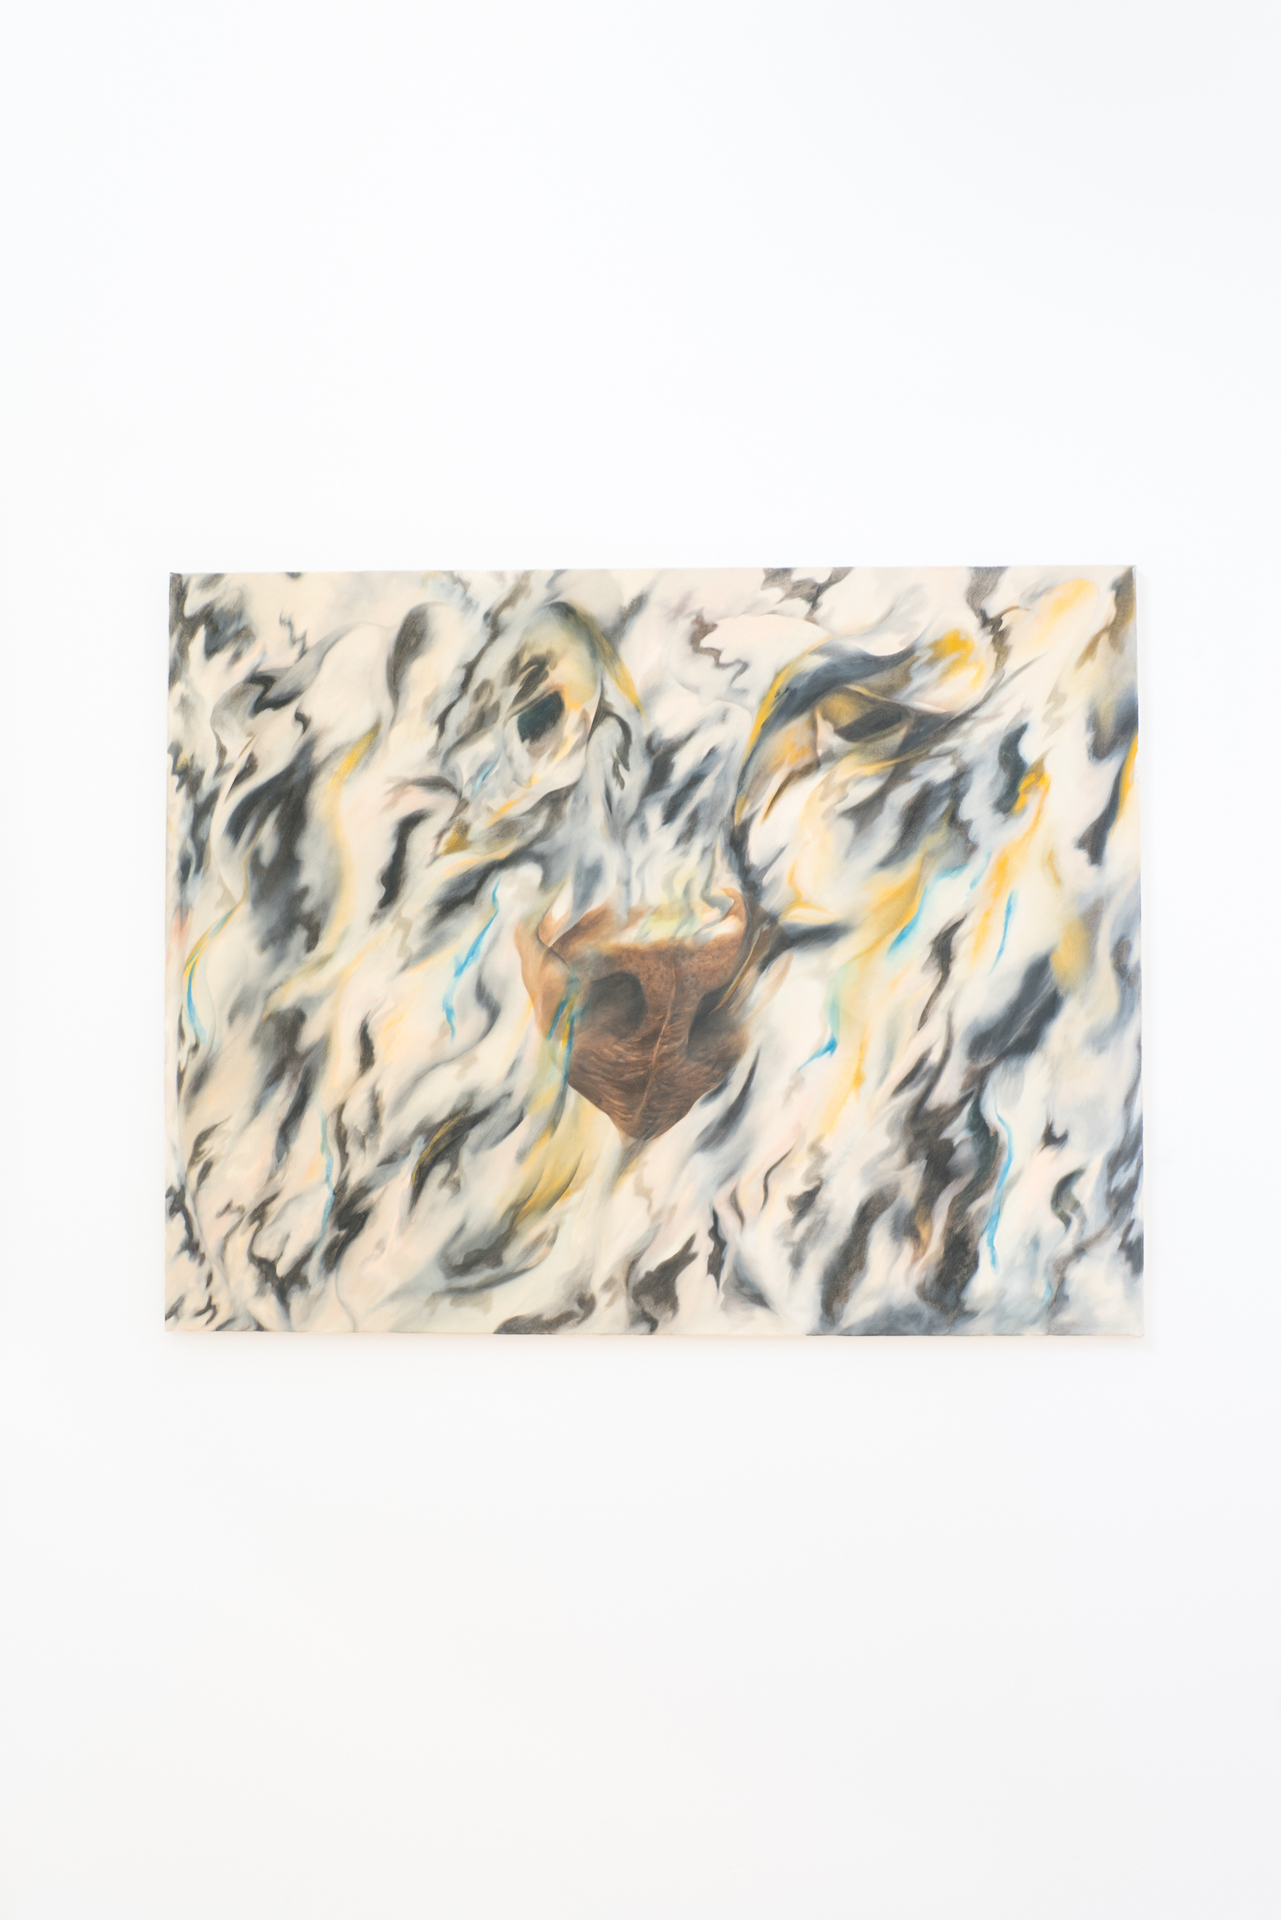 Swan Lee, Unheated - Crying dog, 2020, oil on canvas, 110 x 140 cm